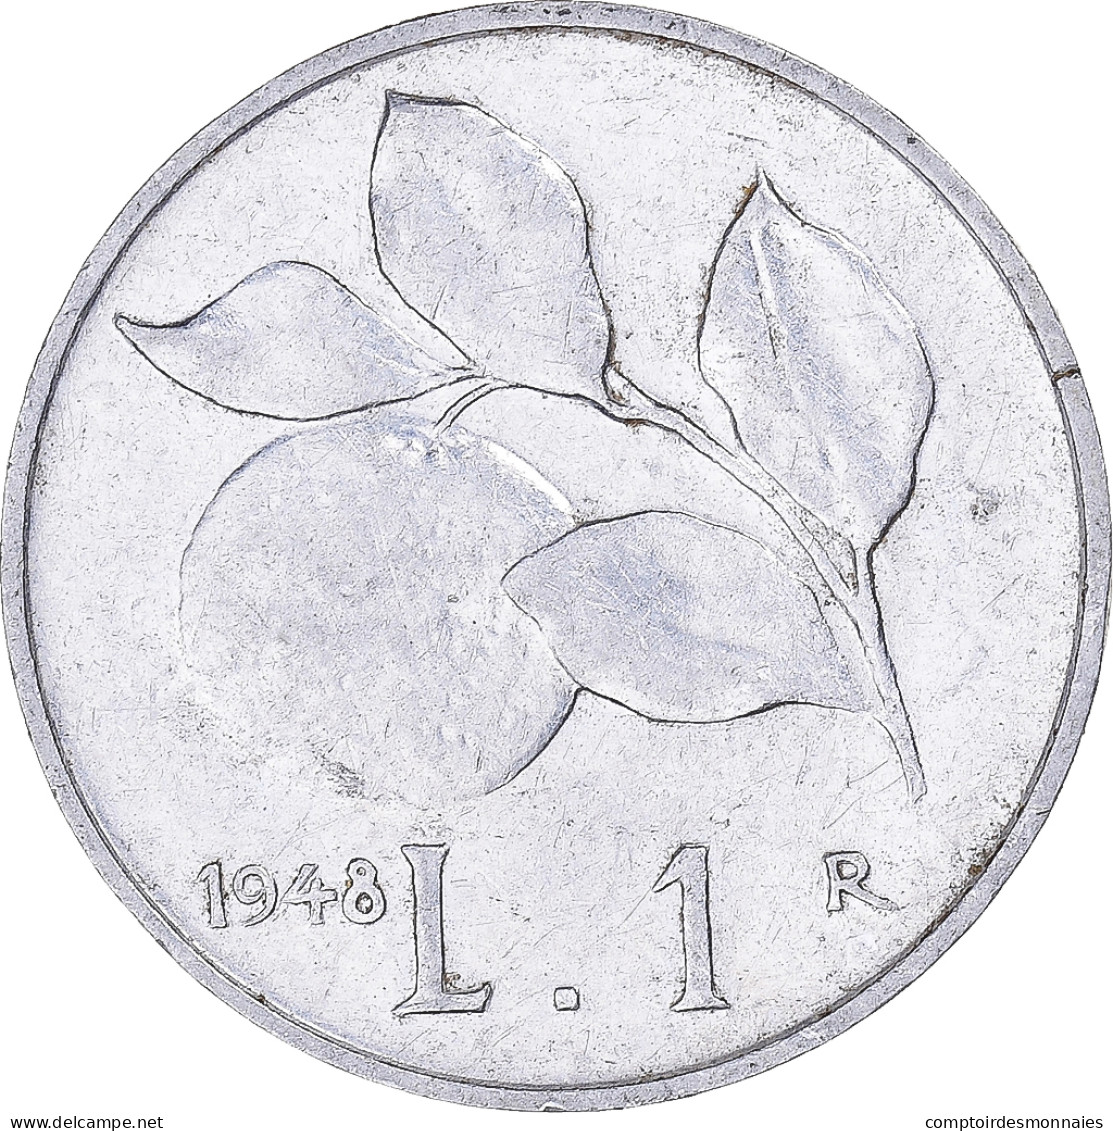 Monnaie, Italie, Lira, 1948, Rome, TTB, Aluminium, KM:87 - 1 Lire